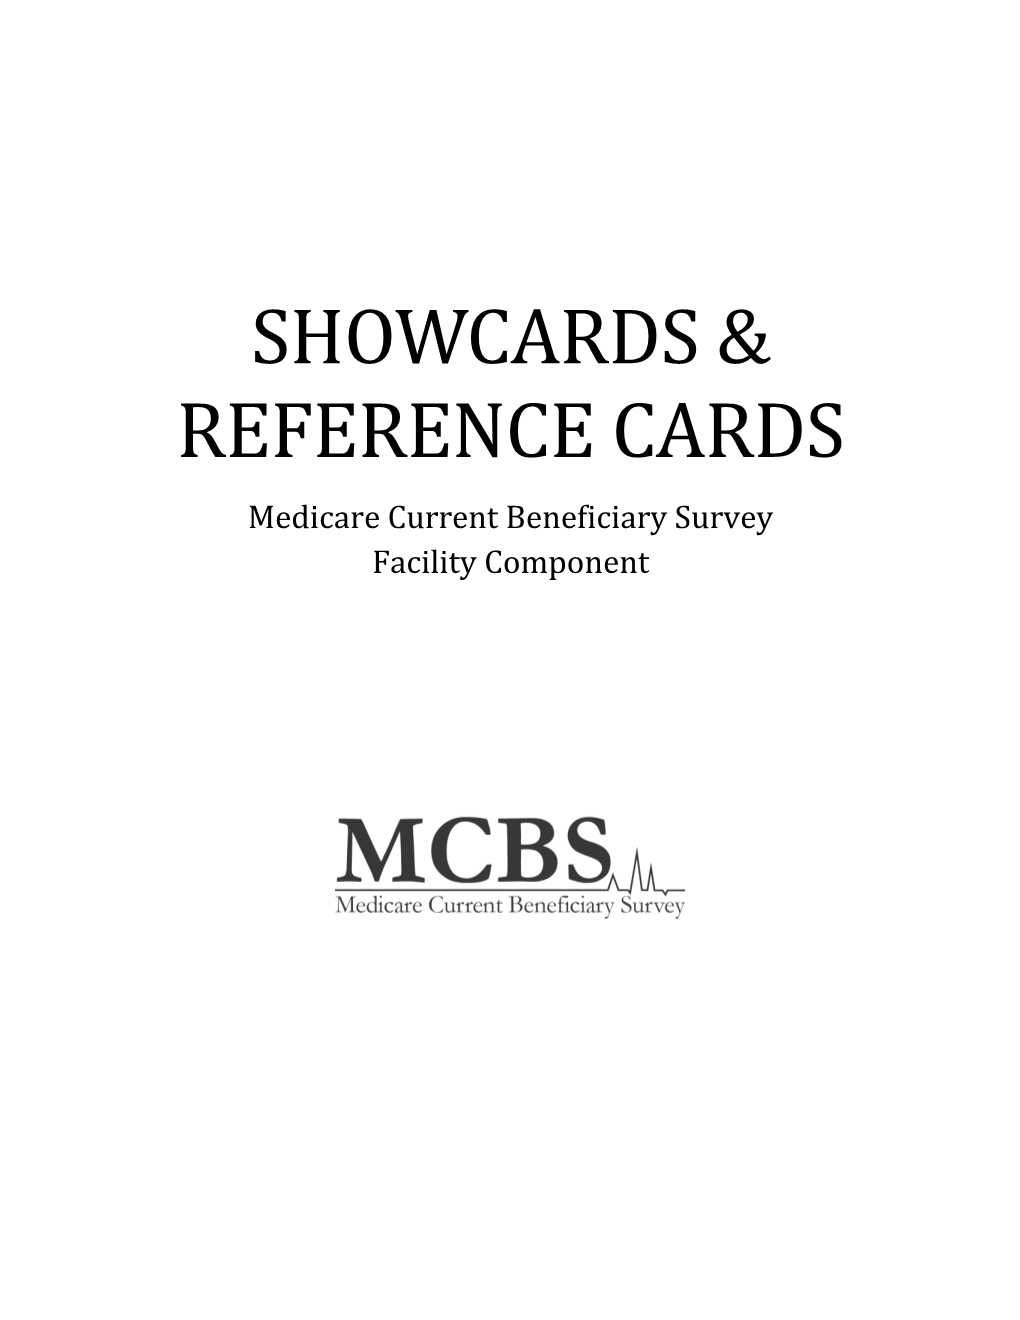 2019 MCBS Facility Showcards